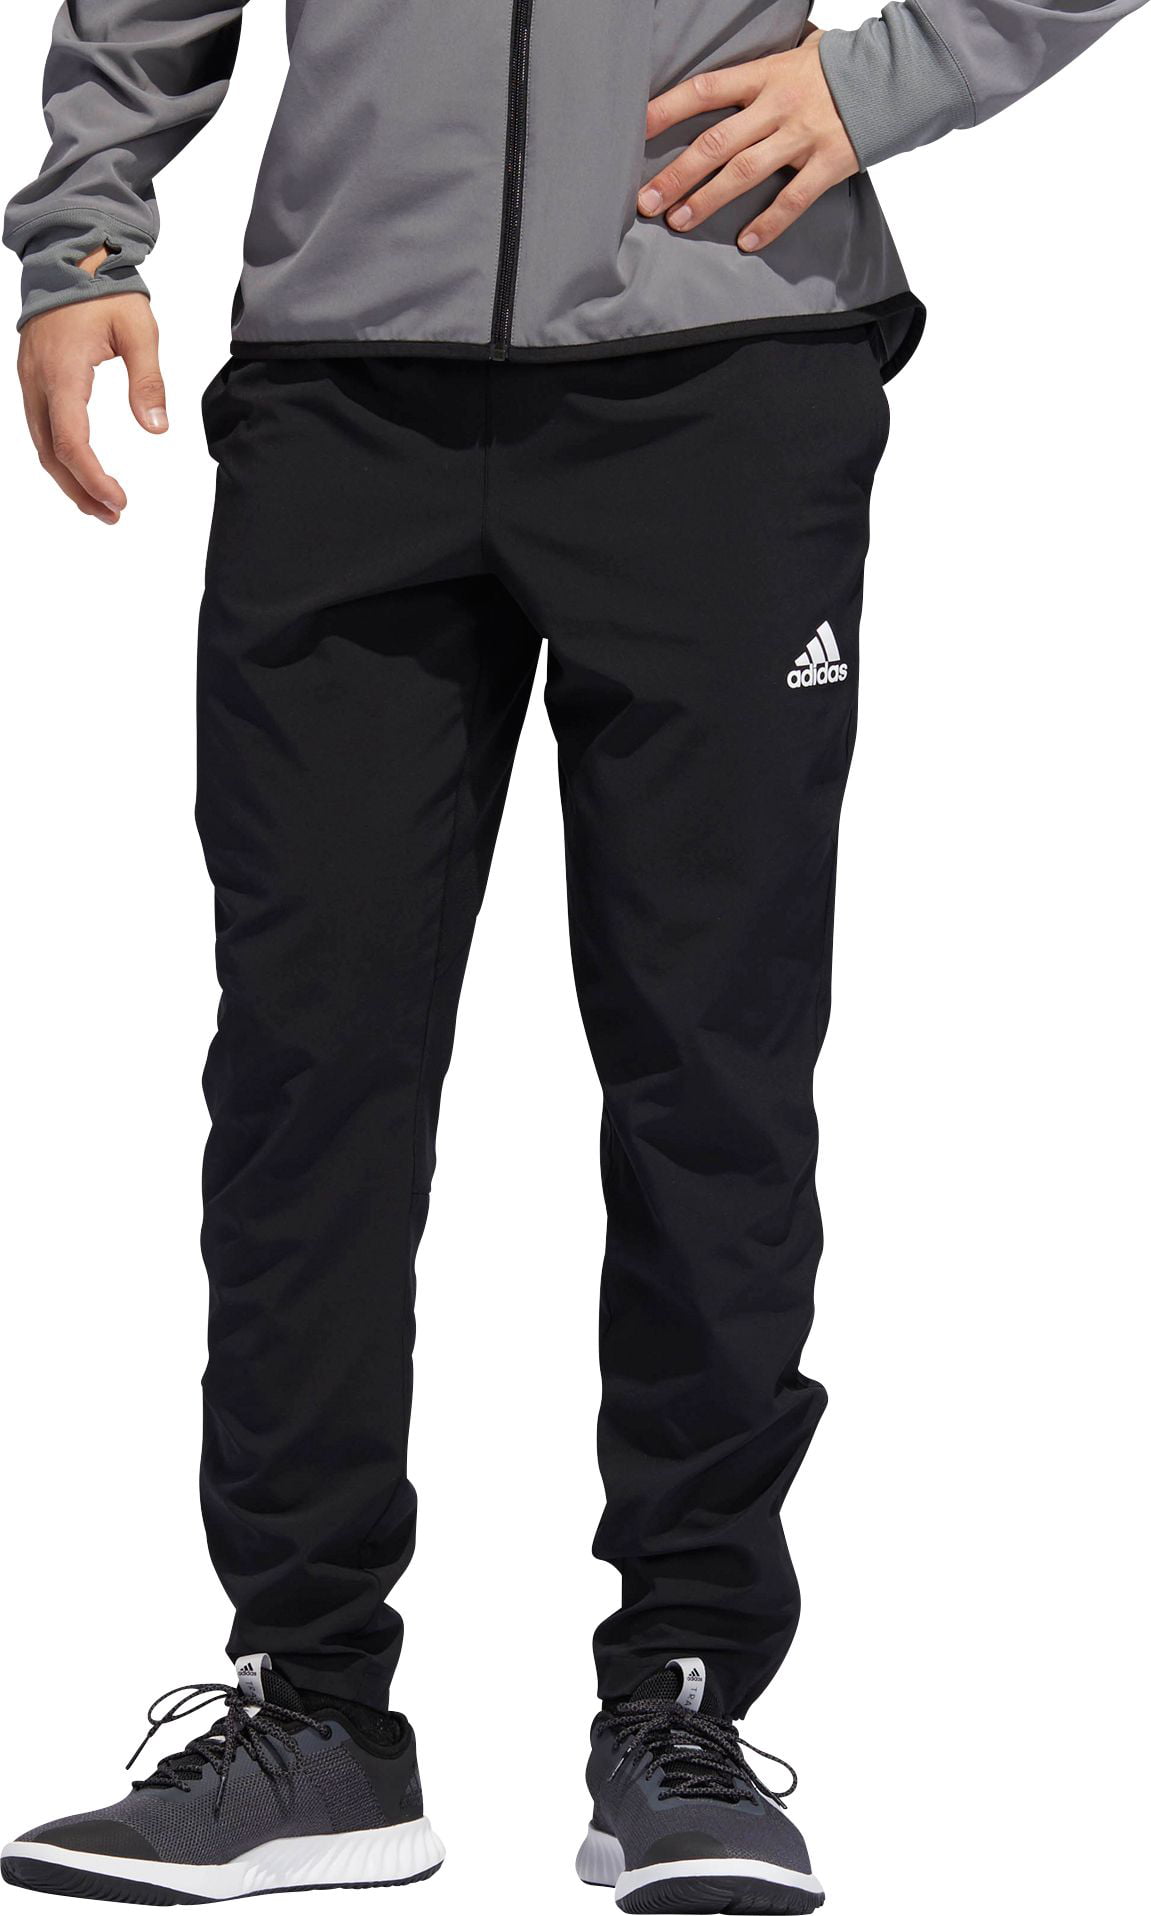 Adidas - adidas Men's Axis Woven Wind Pants - Walmart.com - Walmart.com